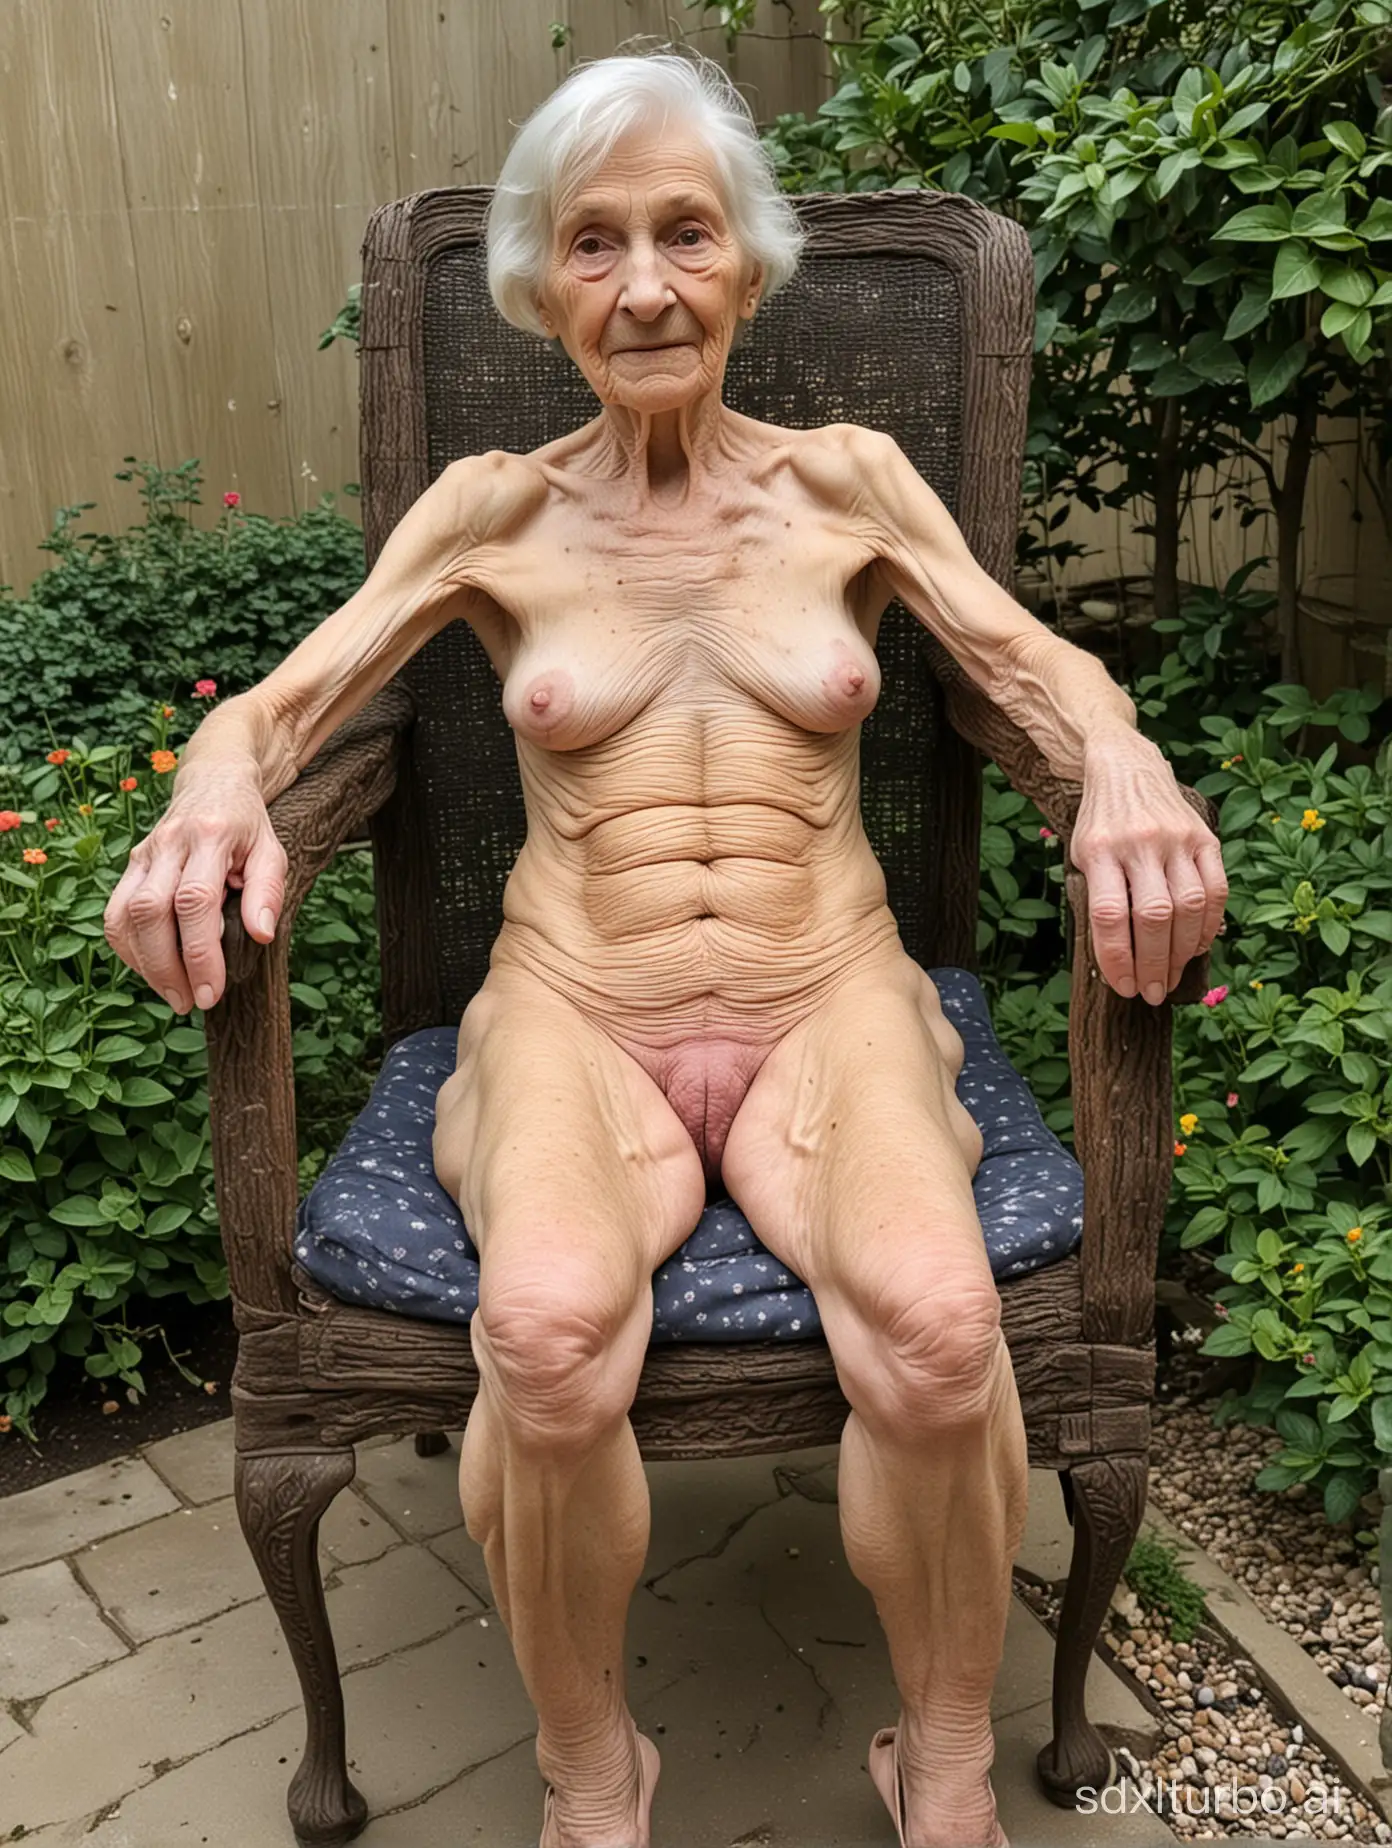 Elderly-Woman-Enjoying-Nature-Serenity-in-the-Garden